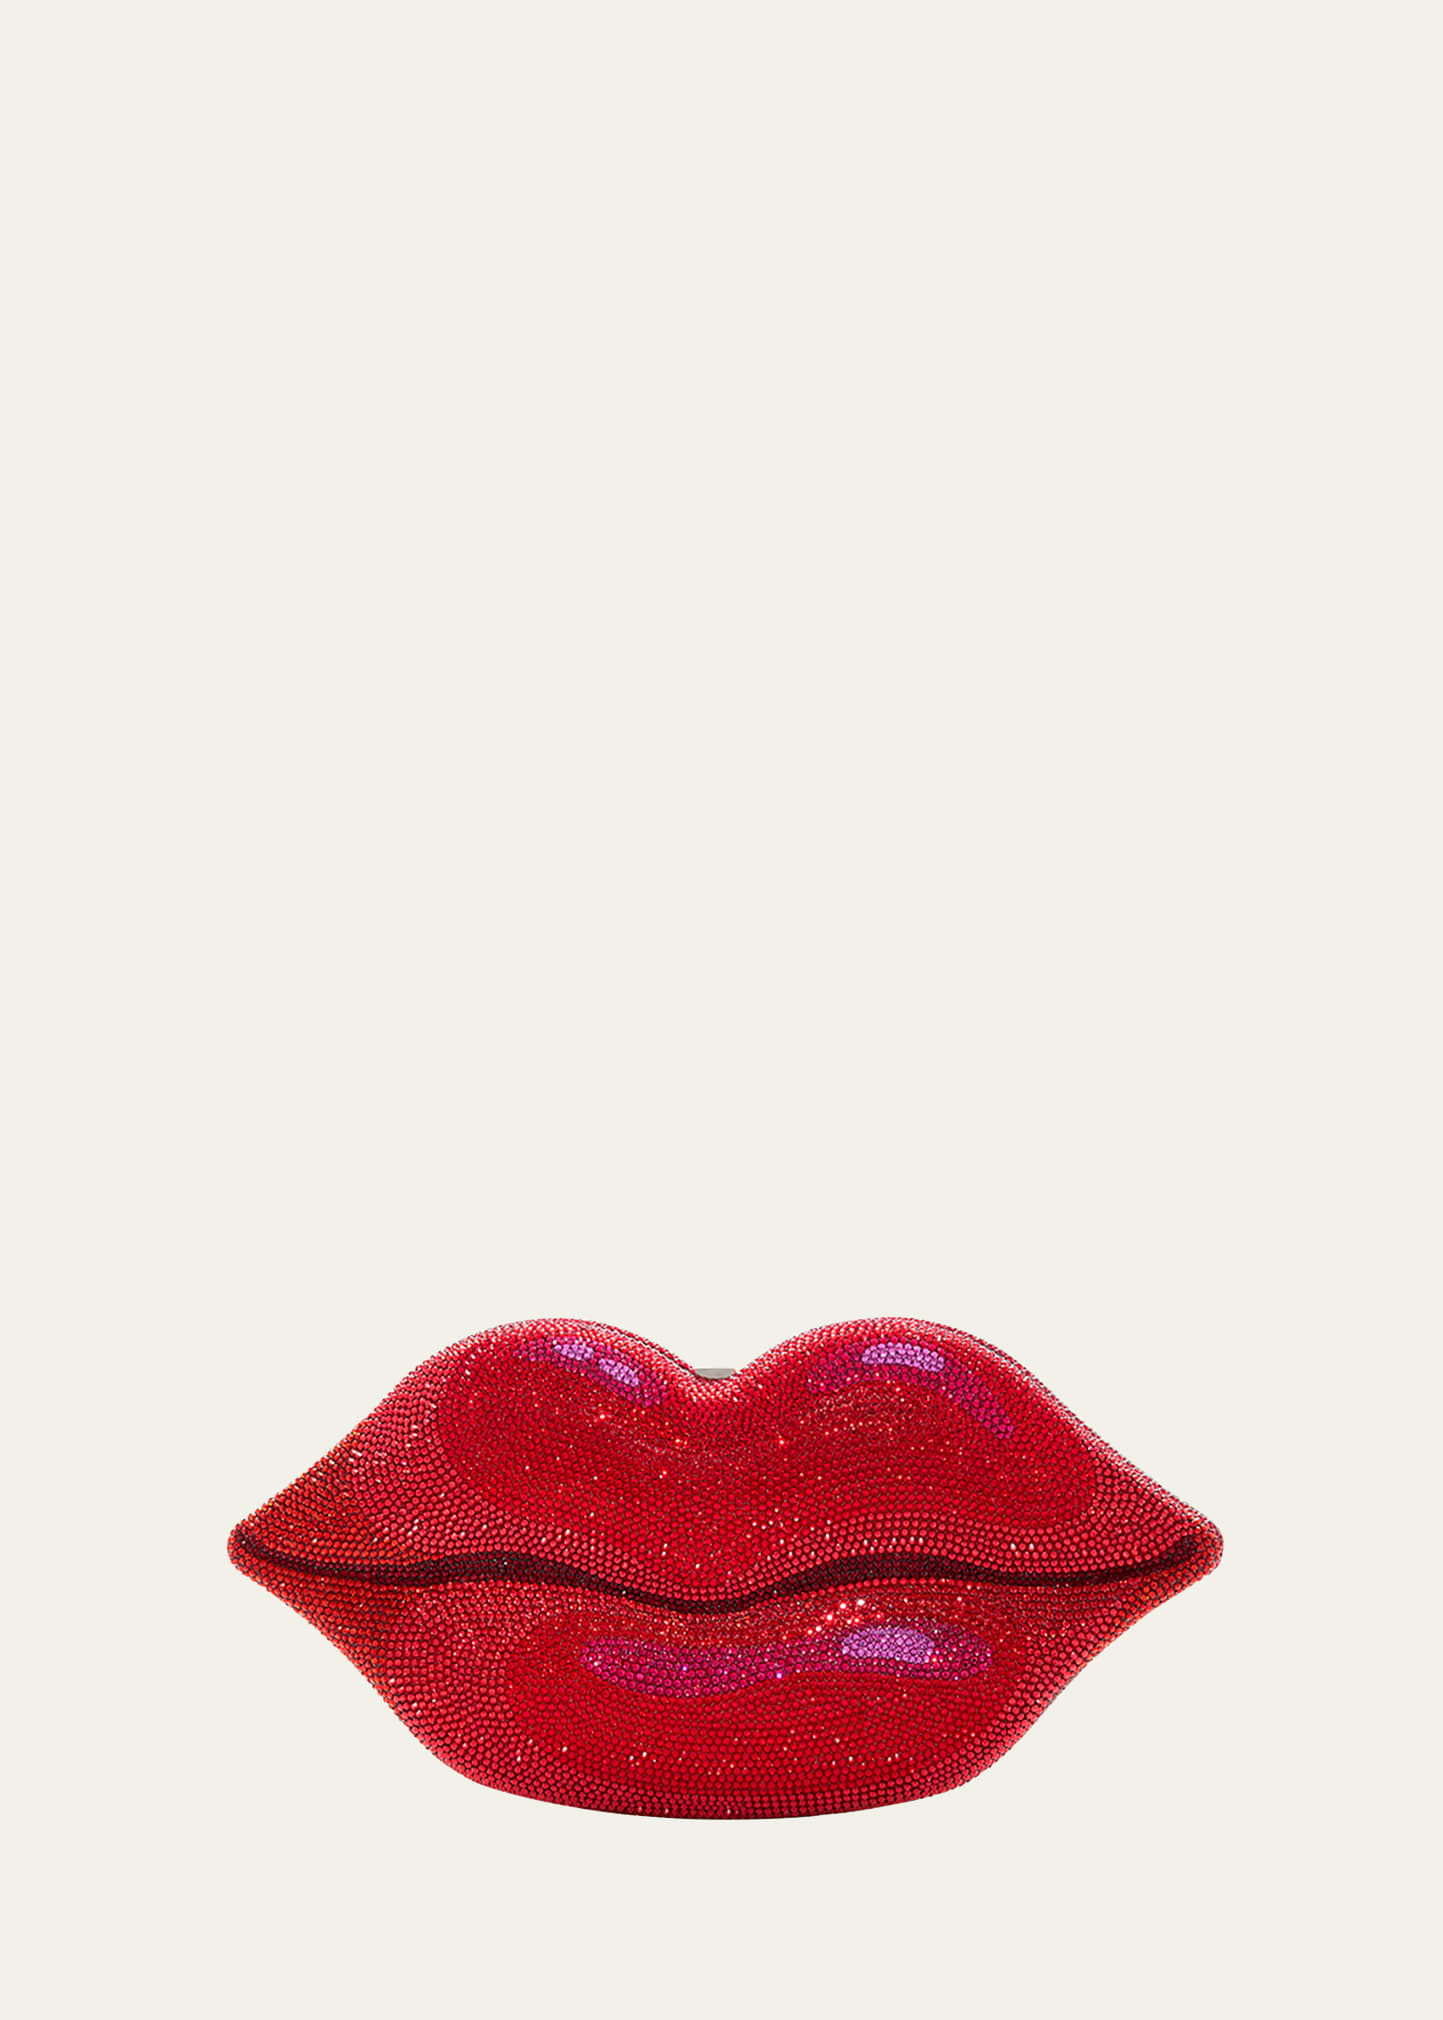 Judith Leiber Hot Lips Crystal Clutch Bag In Dark Red